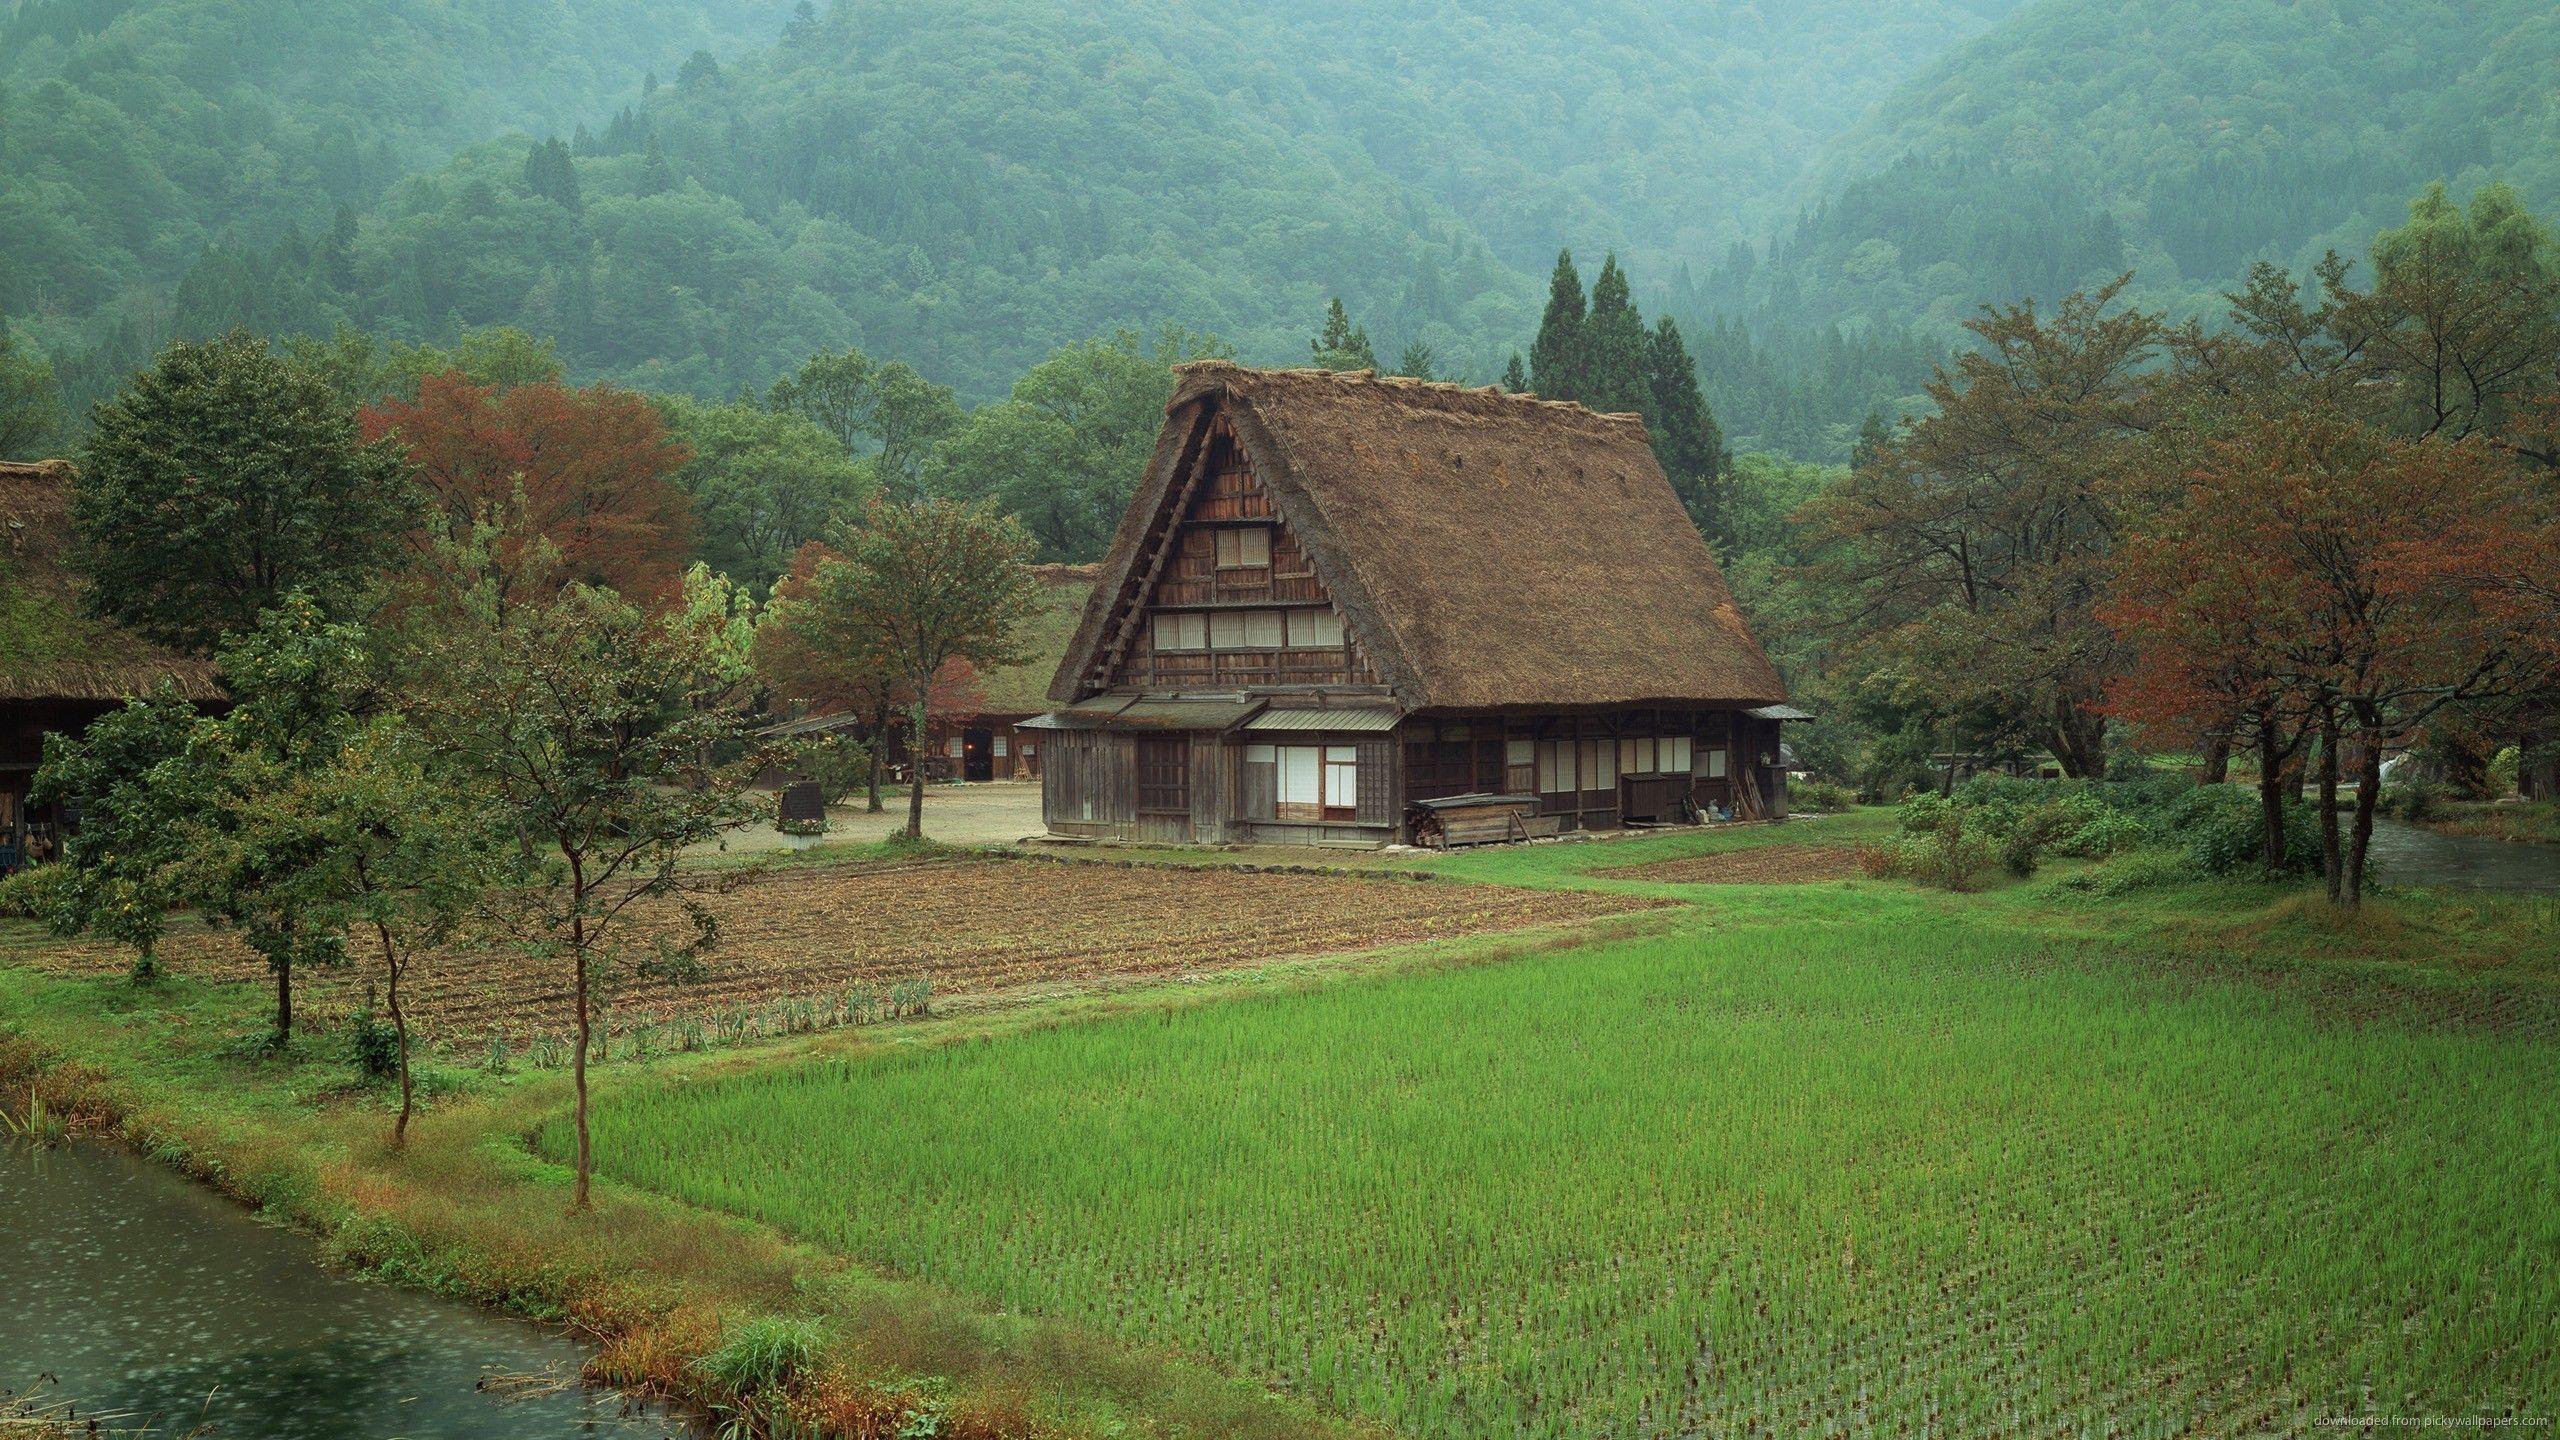 Somewhere in rural Japan unknown 2560 x 1440